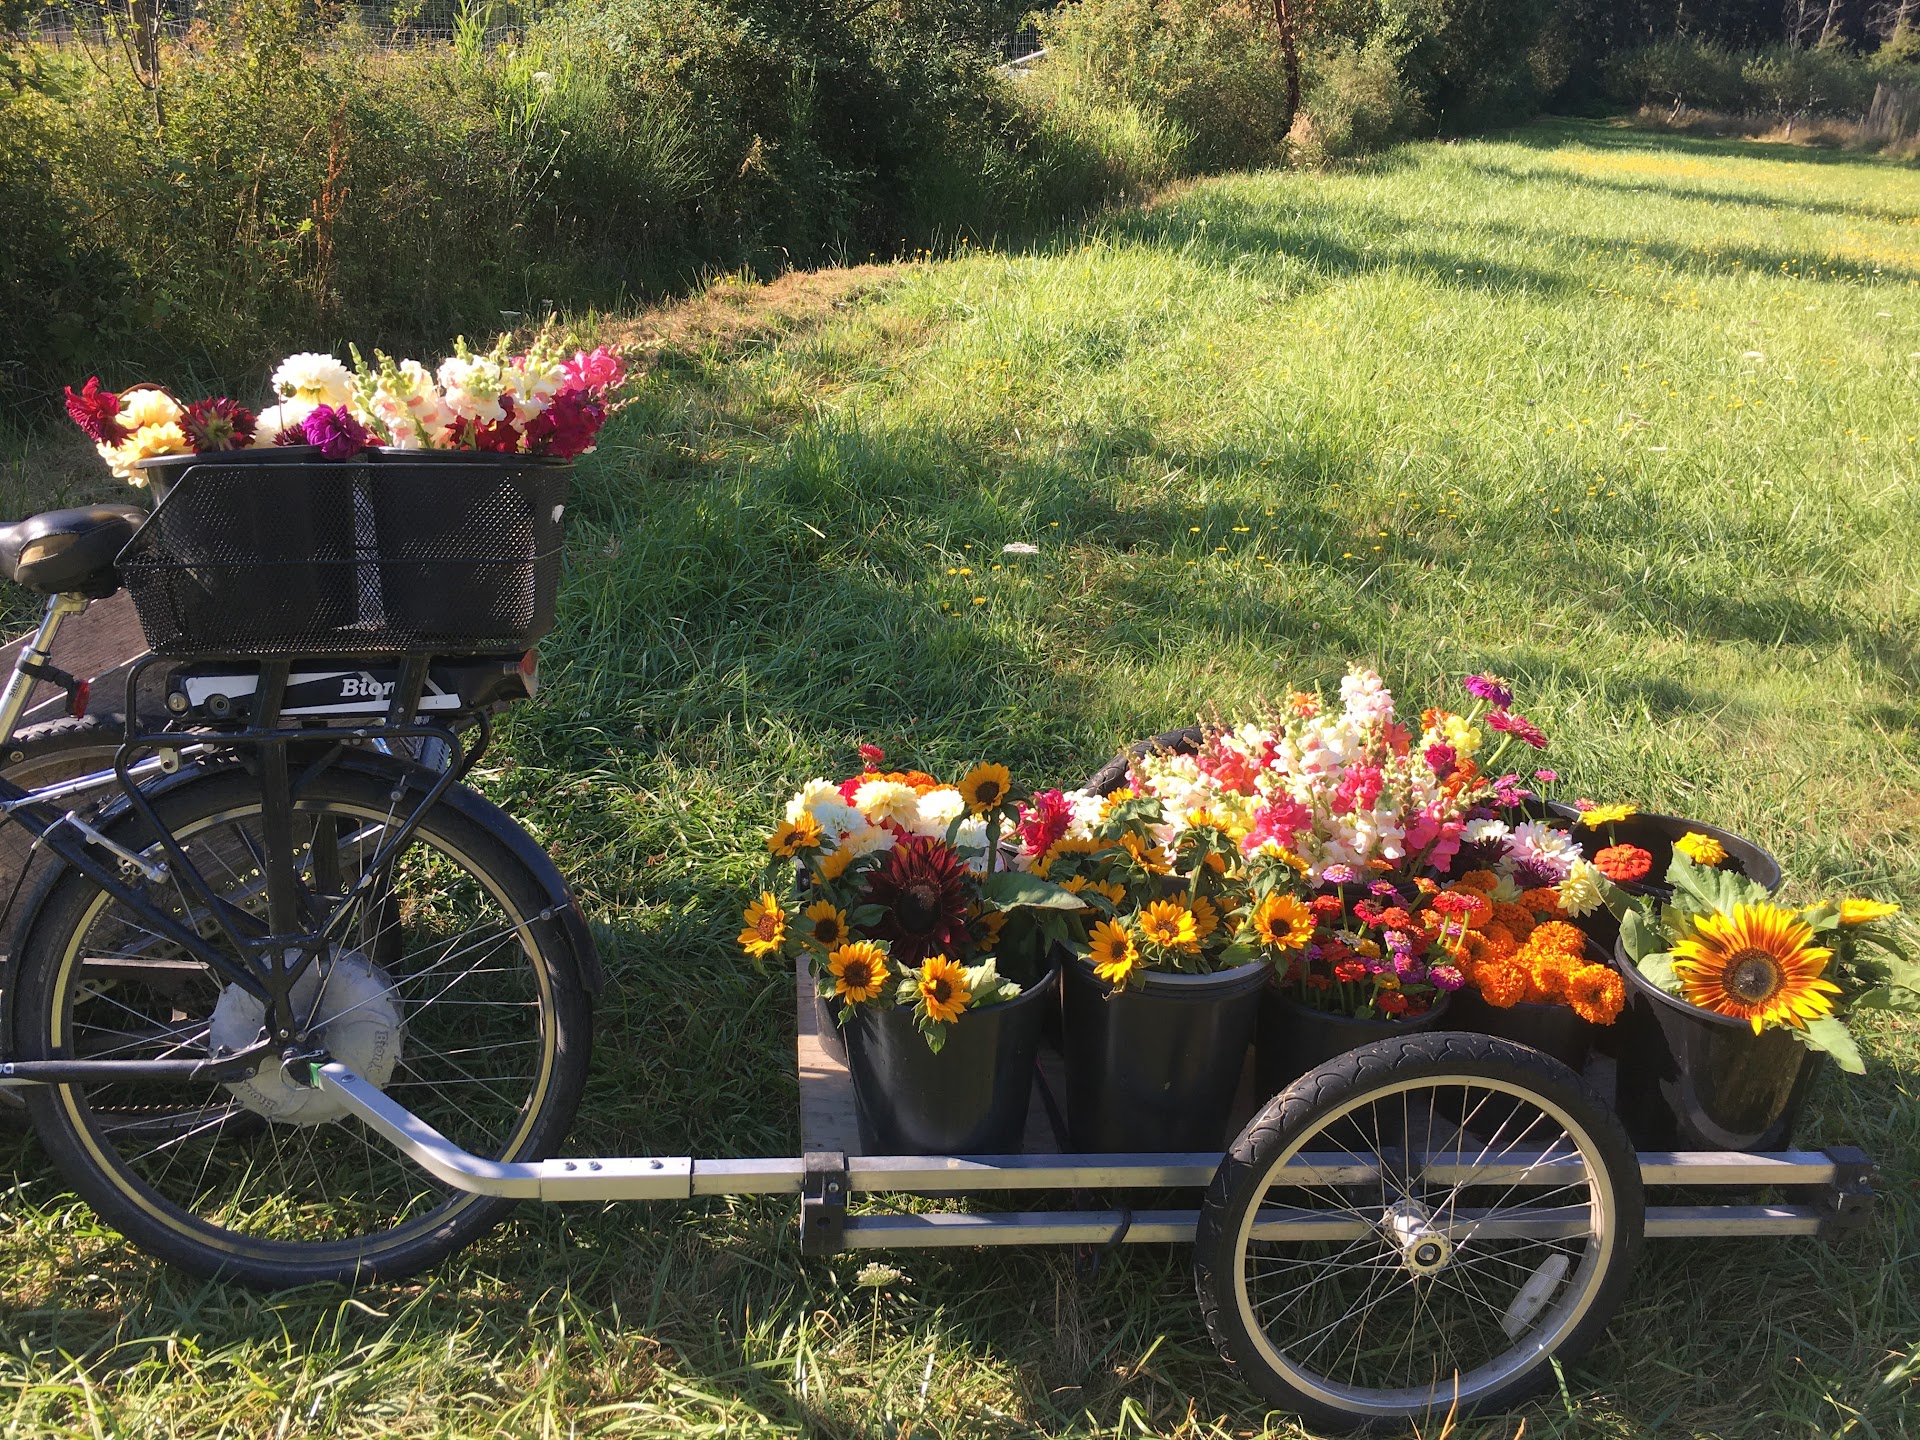 Buckets of flowers on a bike and bike trailer